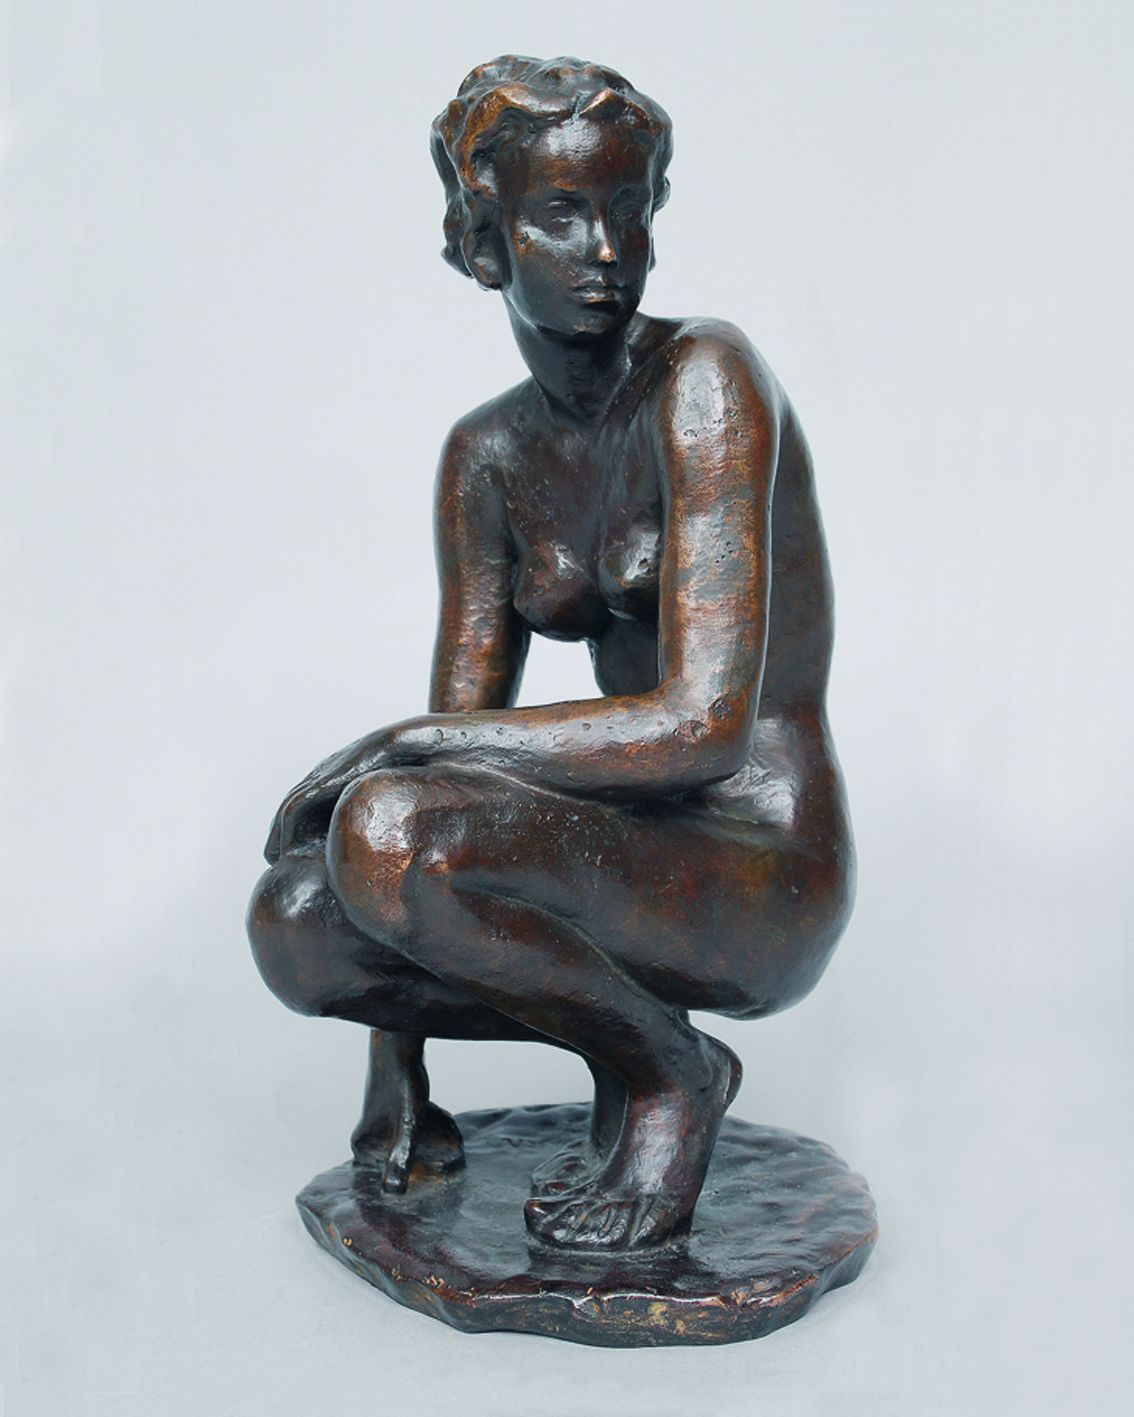 A rare bronze figure of a seated nude